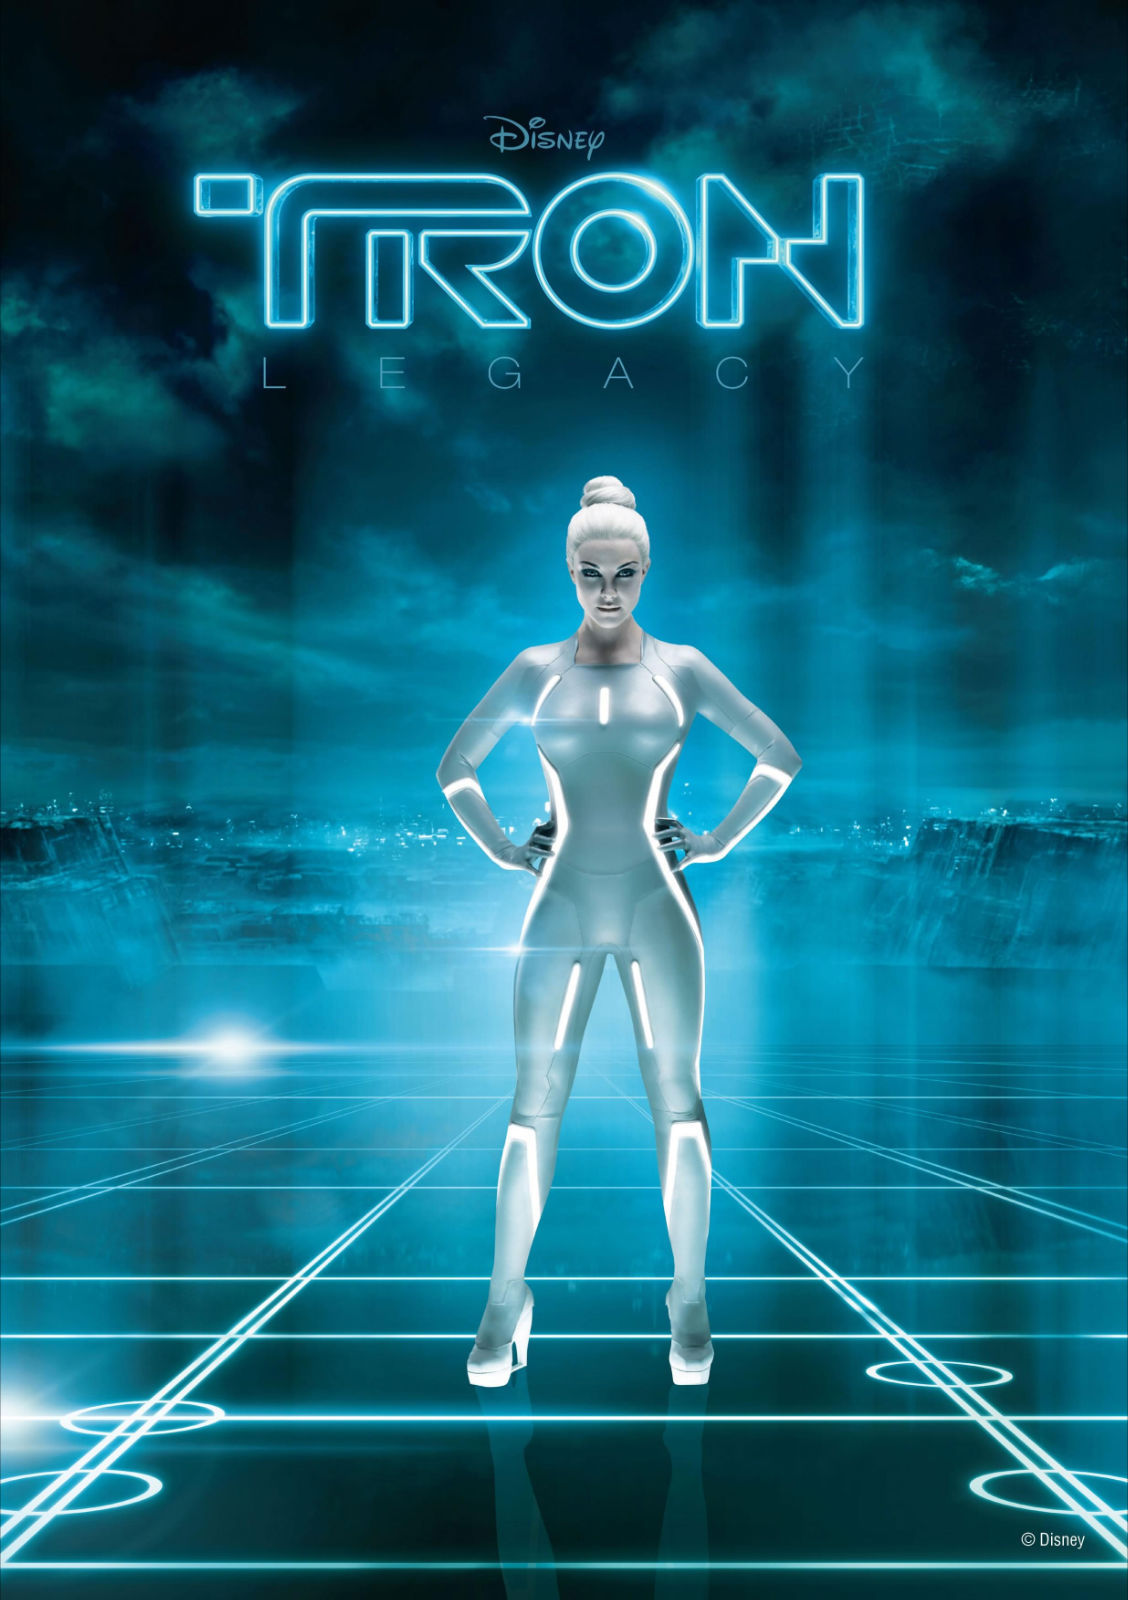 Tron Legacy: Olivia Wilde Poster and Sneak Peek Video